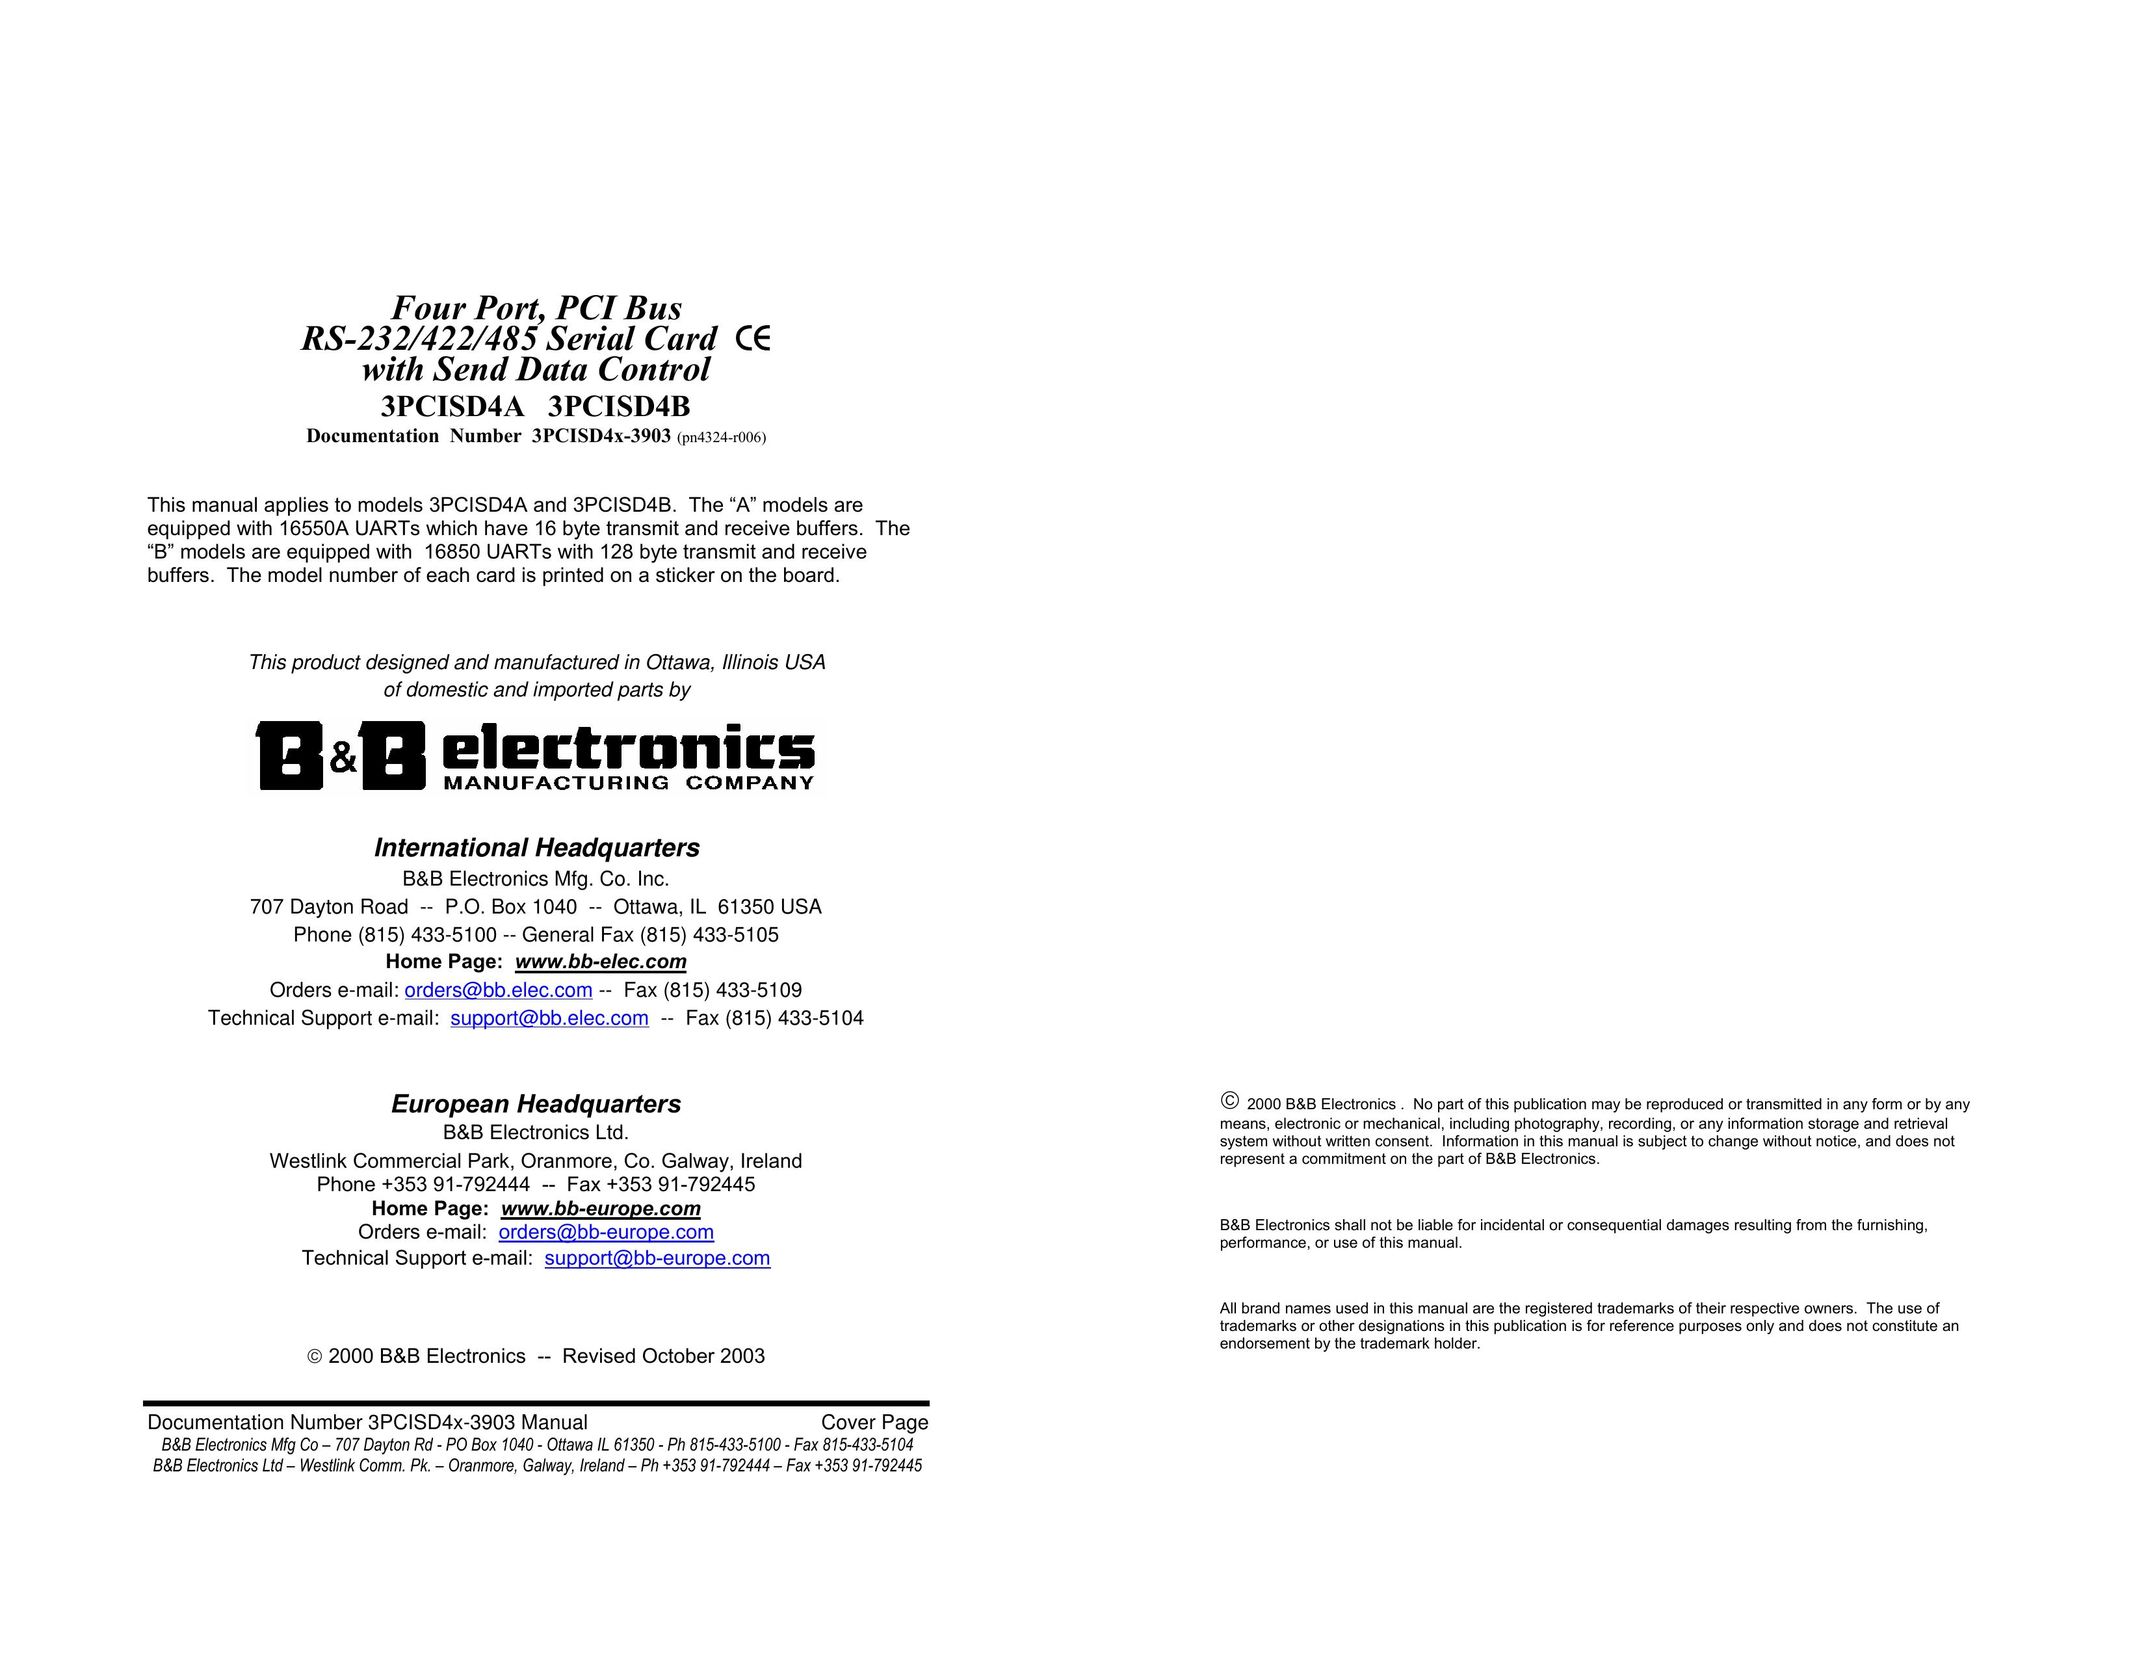 B&B Electronics 3PCISD4B Computer Accessories User Manual